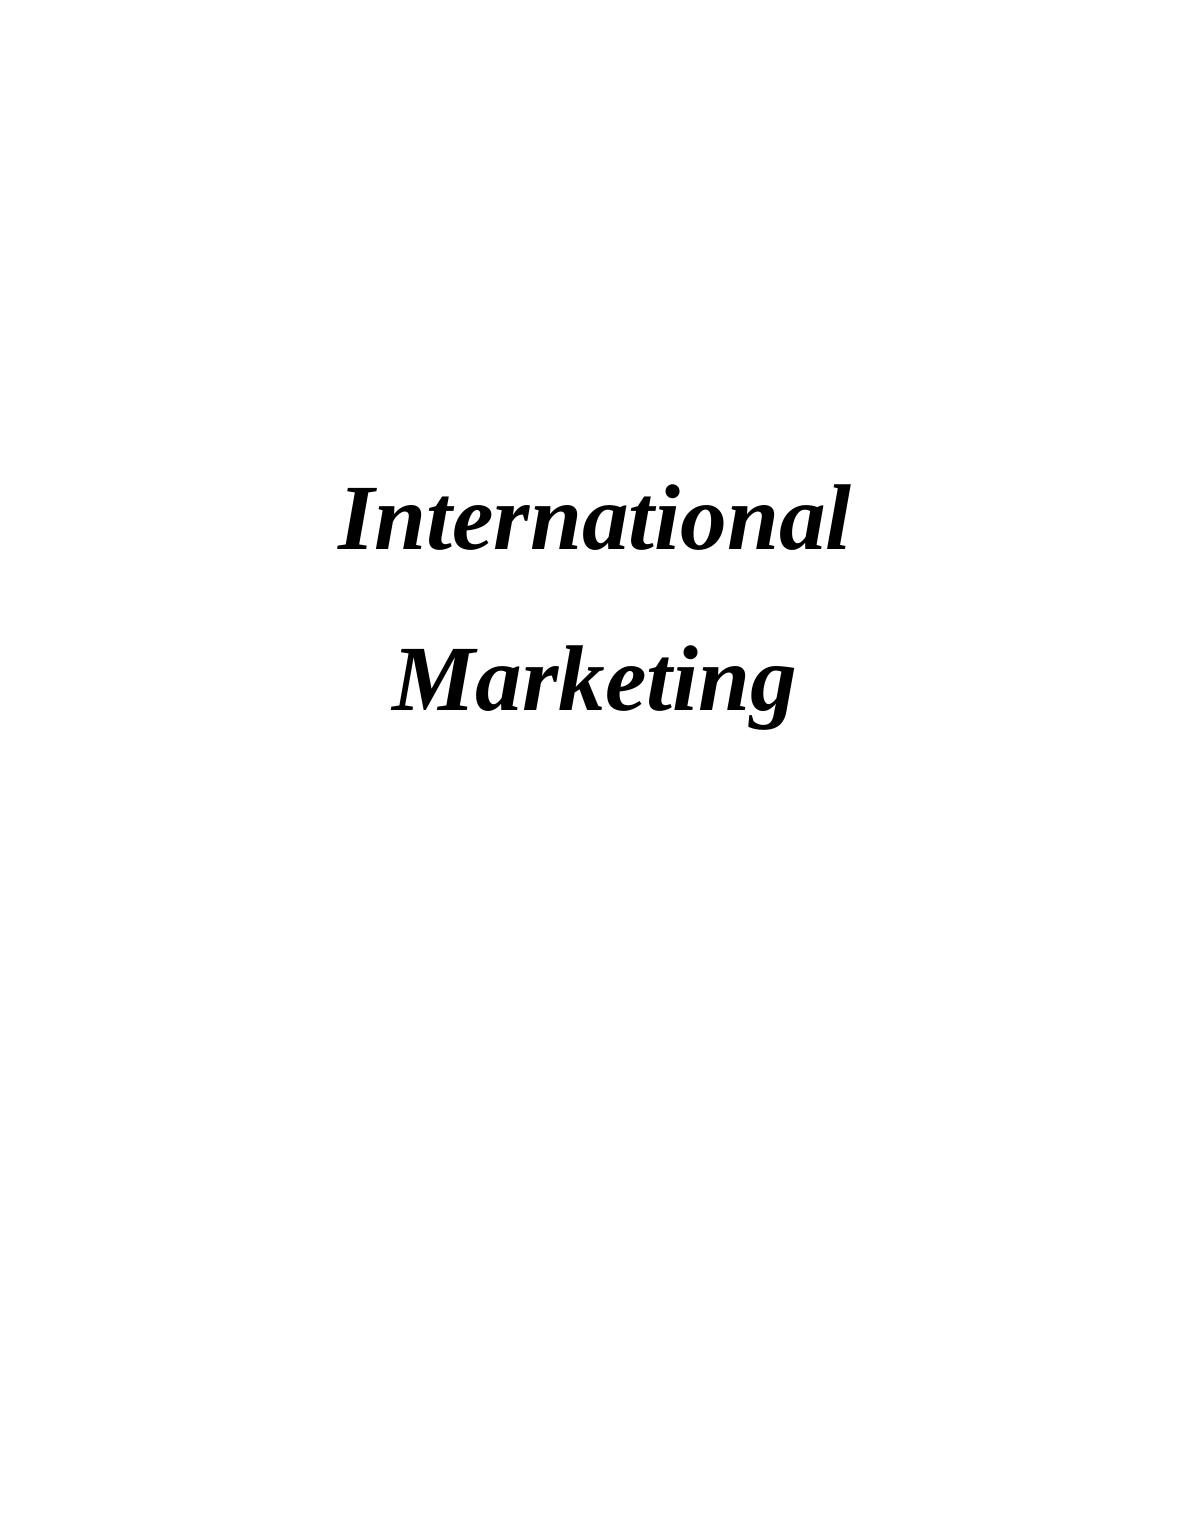 PESTEL analysis of International Marketing_1